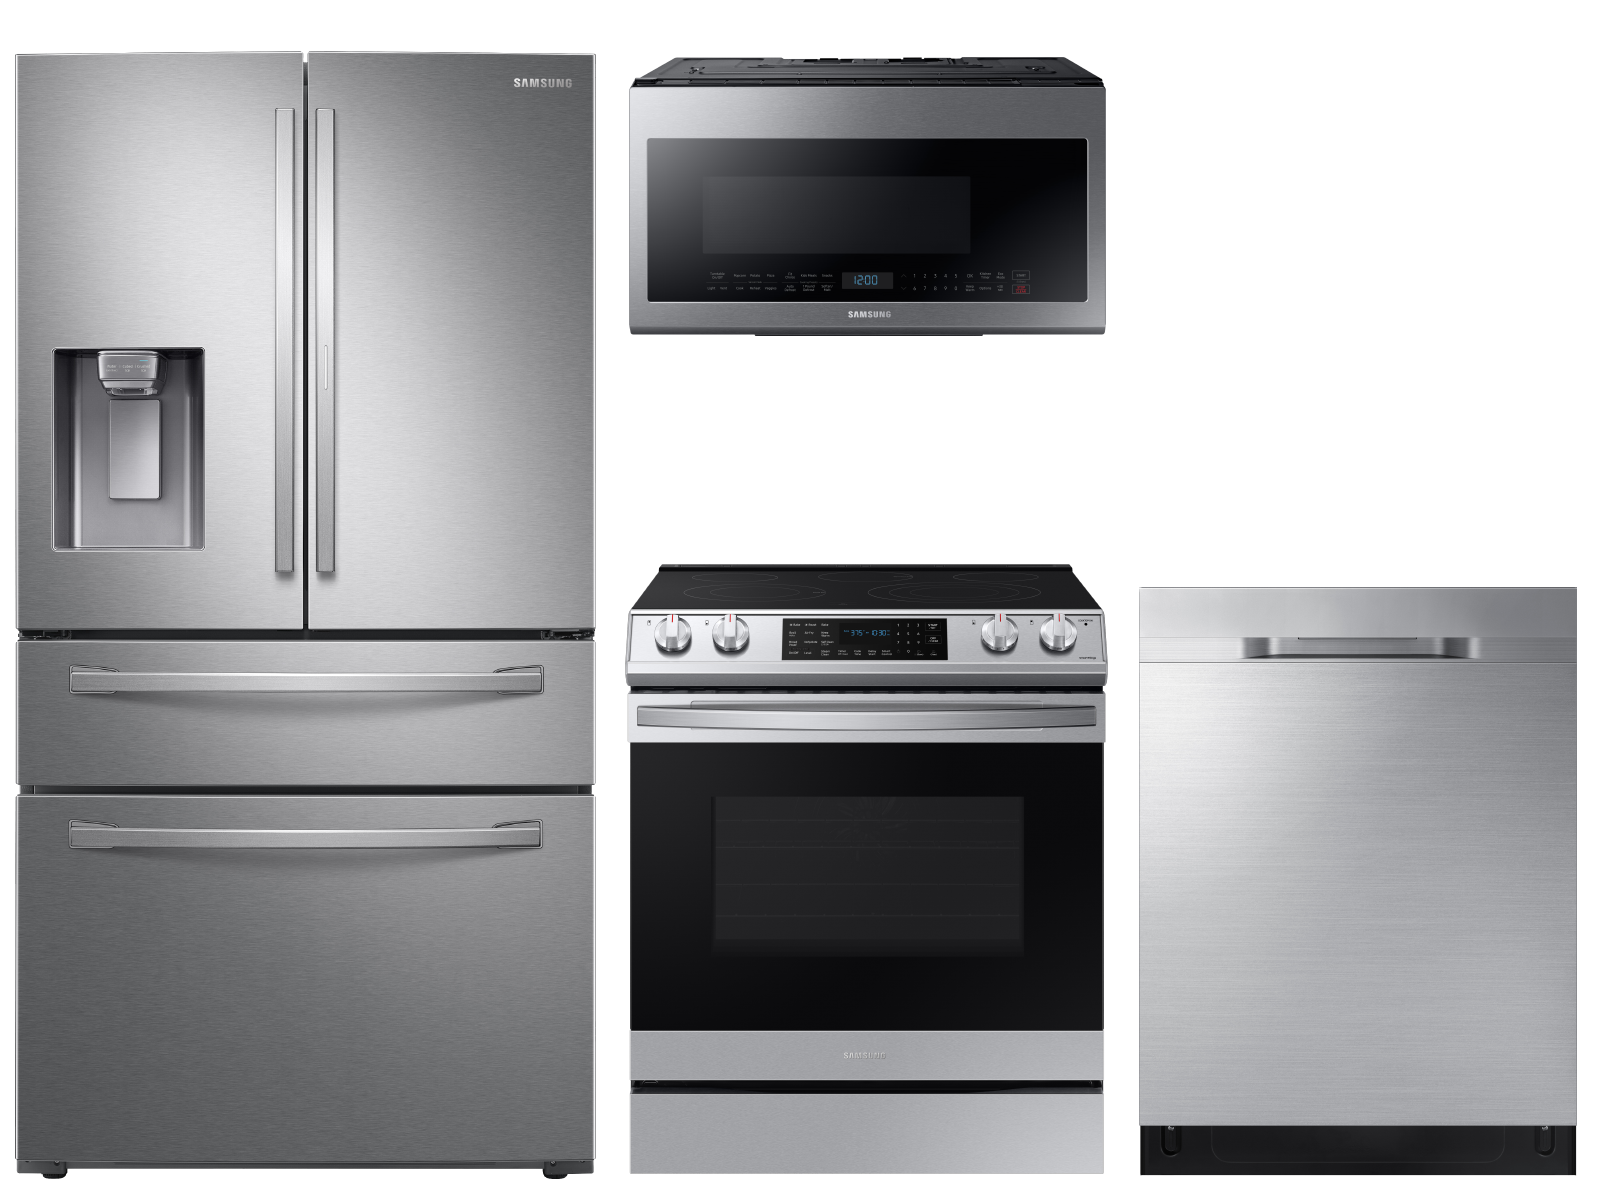 Samsung Food Showcase 4-Door Refrigerator + Slide-in Electric Range with Air Fry + StormWash™ Dishwasher + Microwave in Stainless Steel